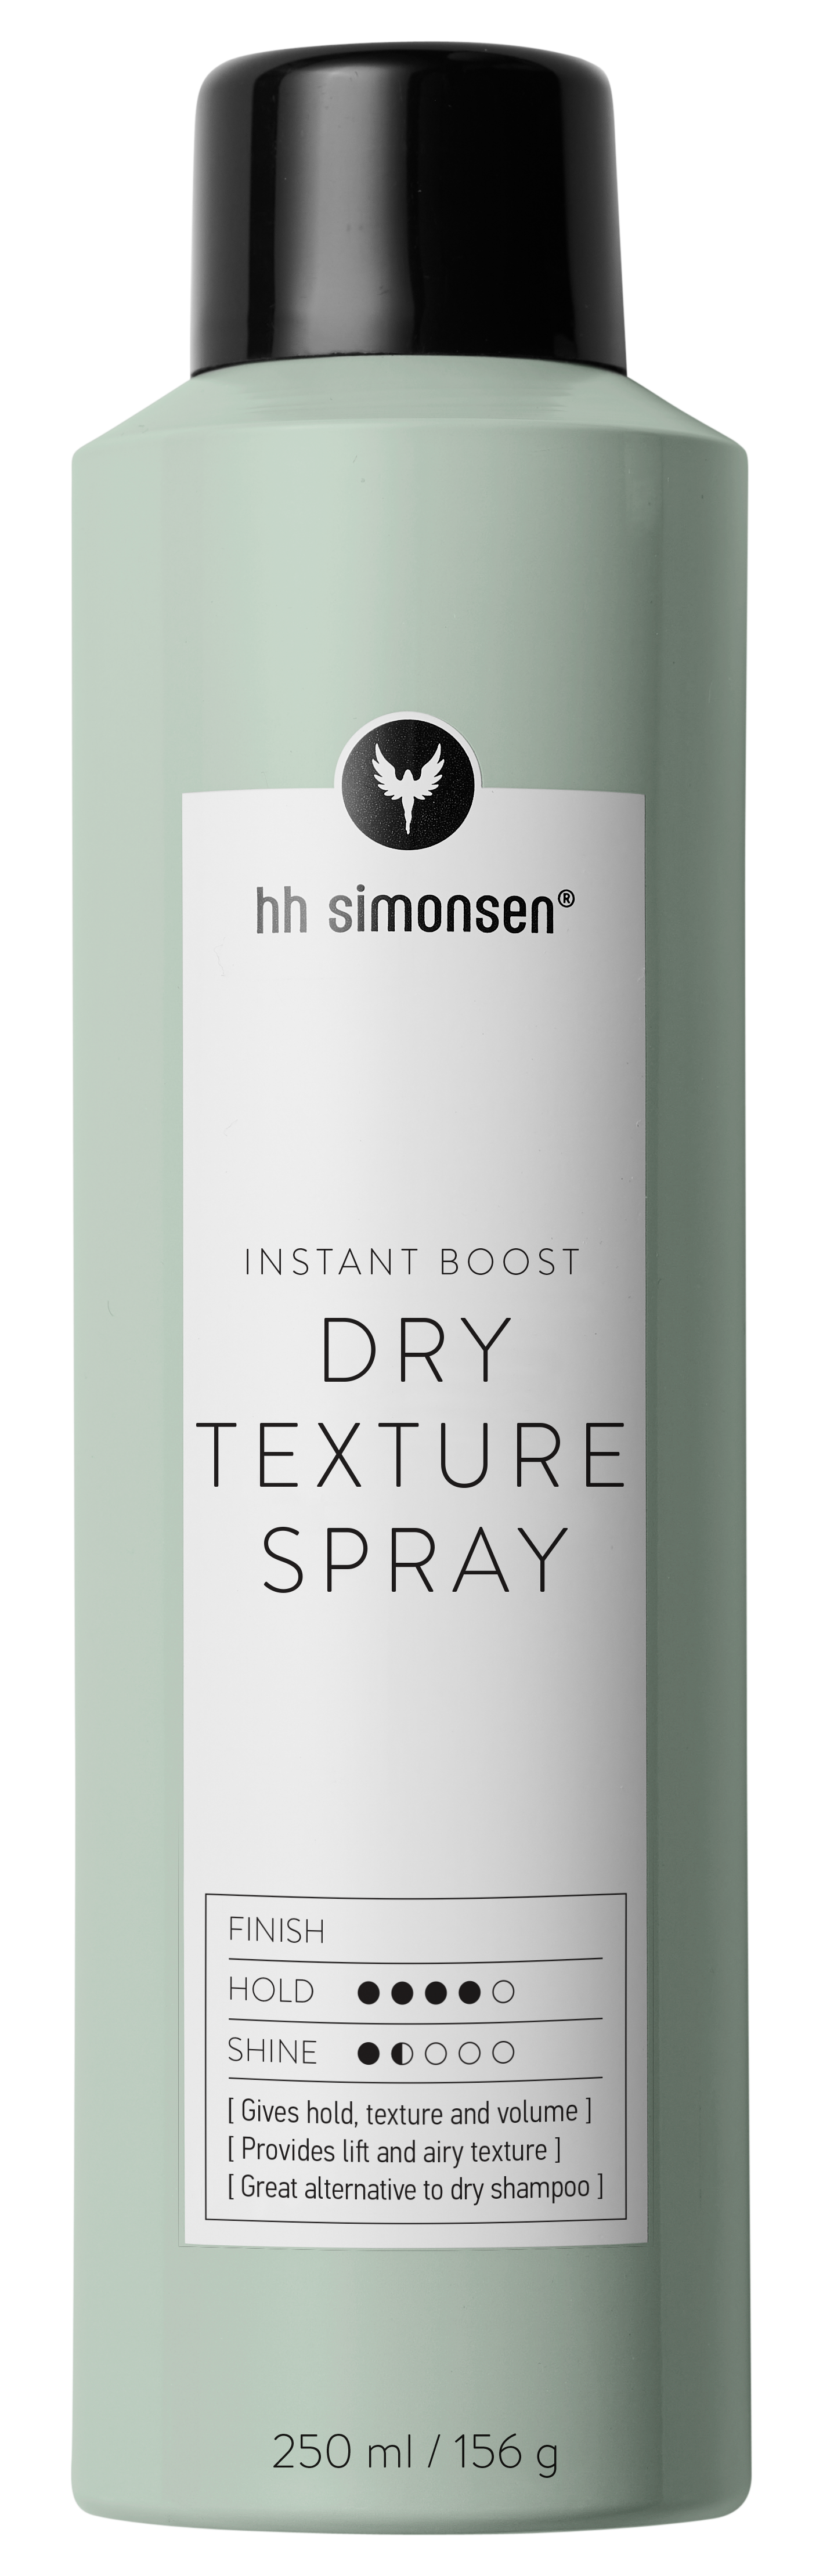 Dry Texture Spray, 250 ml